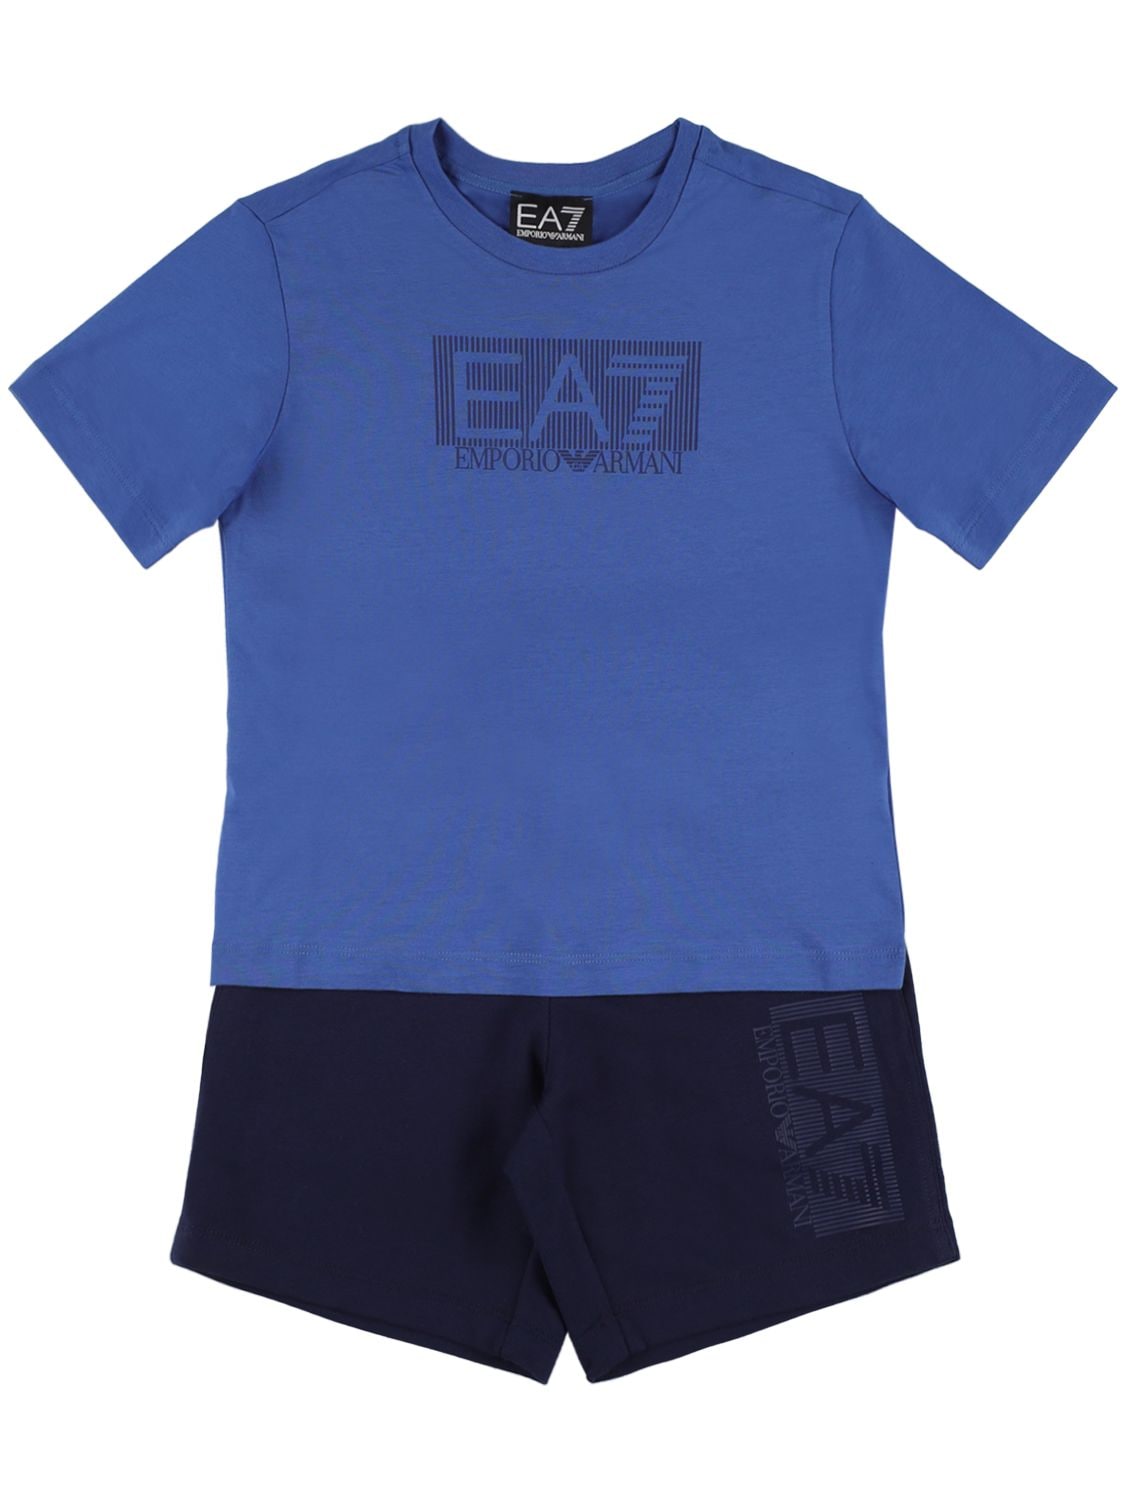 Ea7 Kids' Logo Cotton Jersey T-shirt & Shorts In Blue,navy